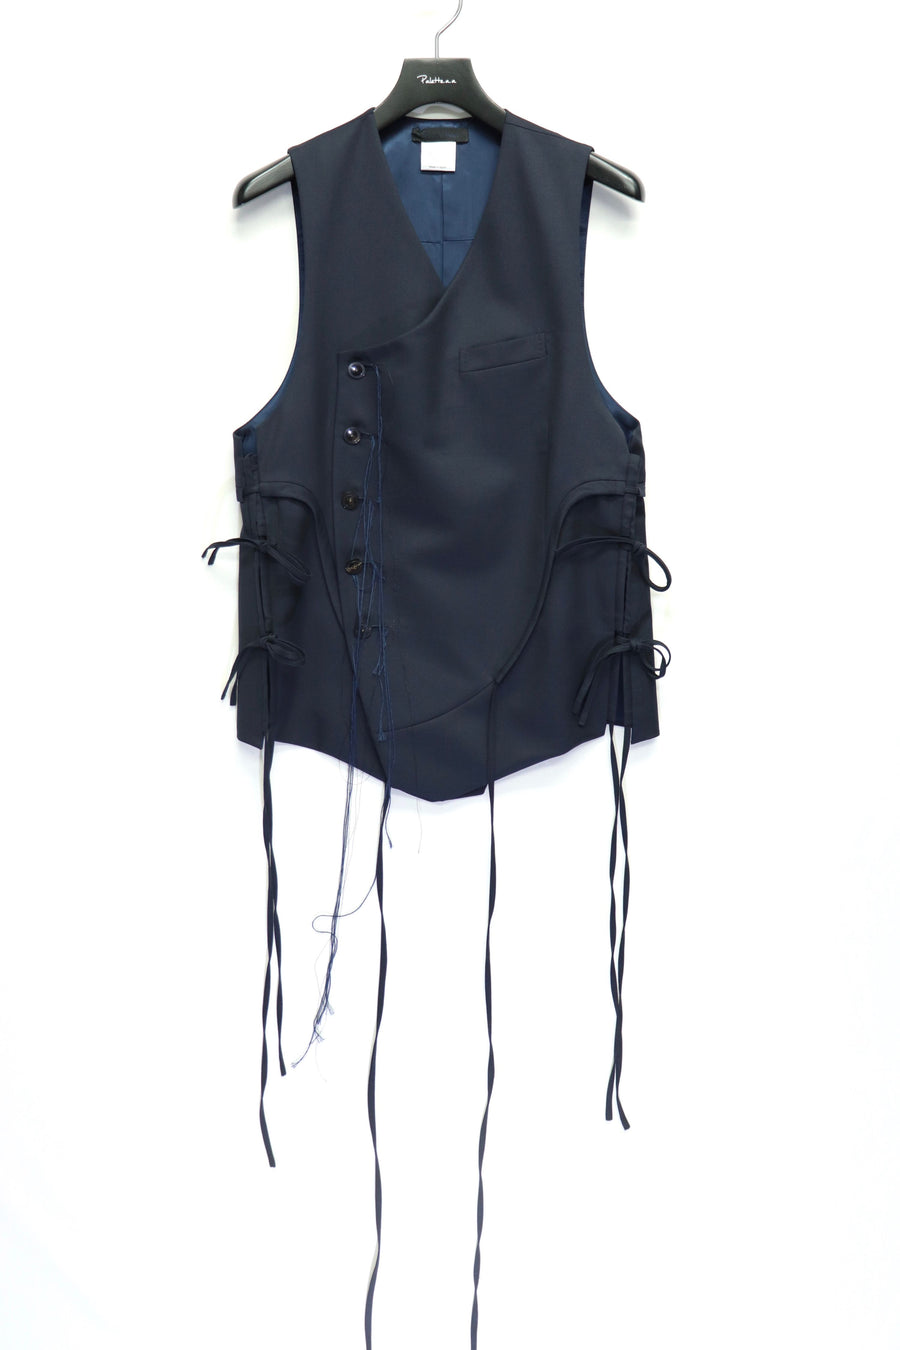 Nobuyuki Matsui Duality Vest 21-22aw変わった形に作られたベスト